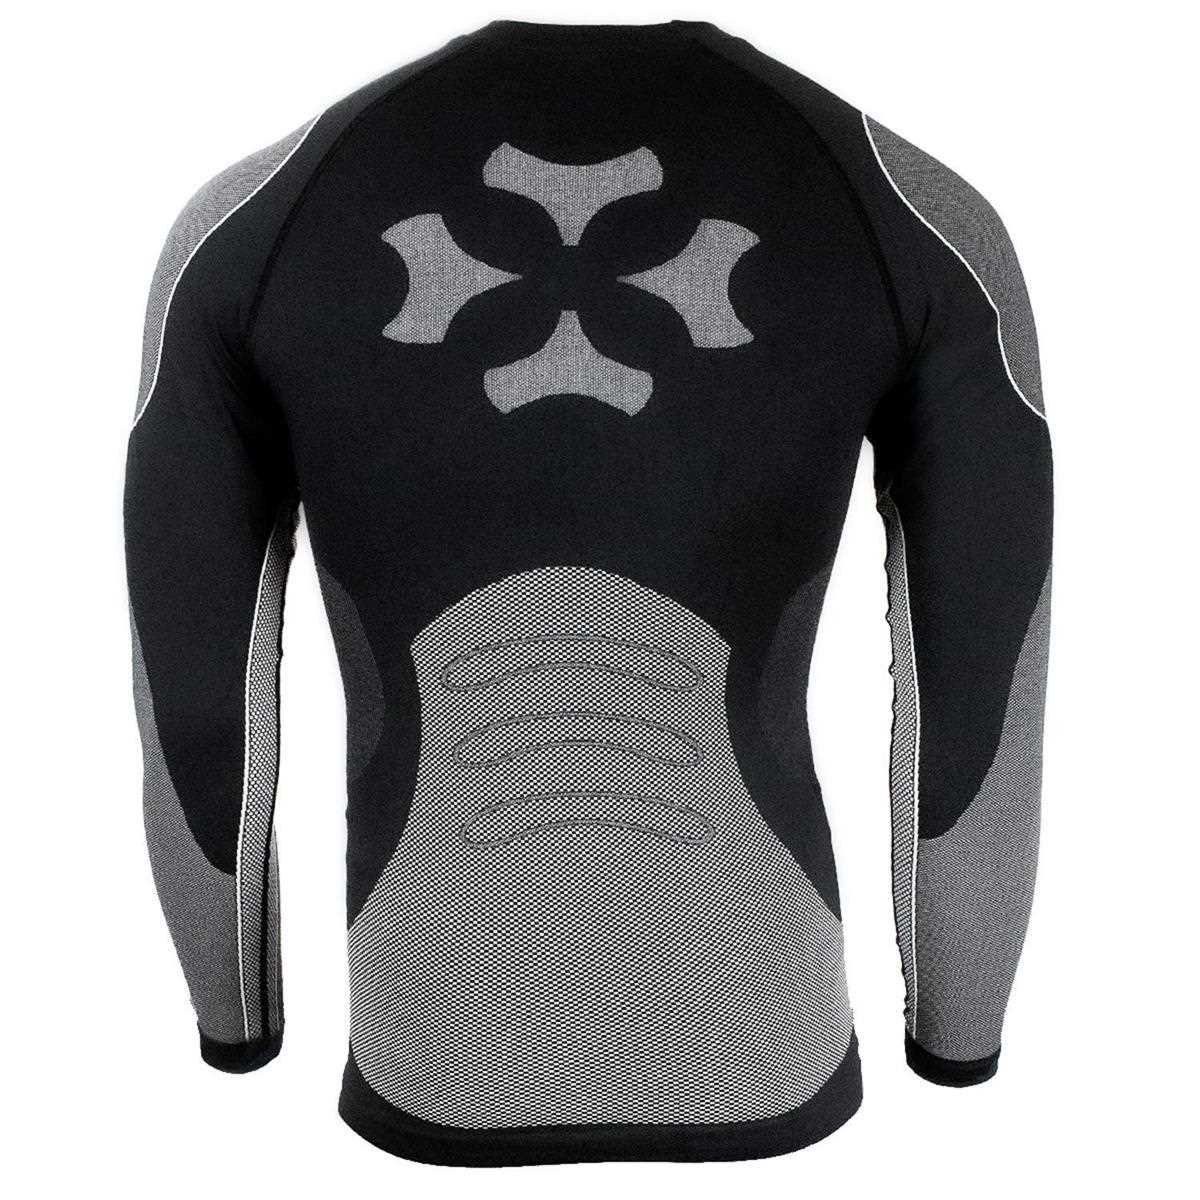 Black Snake Funktionsunterhemd python Sportunterhemd Seamless (1-St) Skiunterhemd Schwarz Thermounterhemd